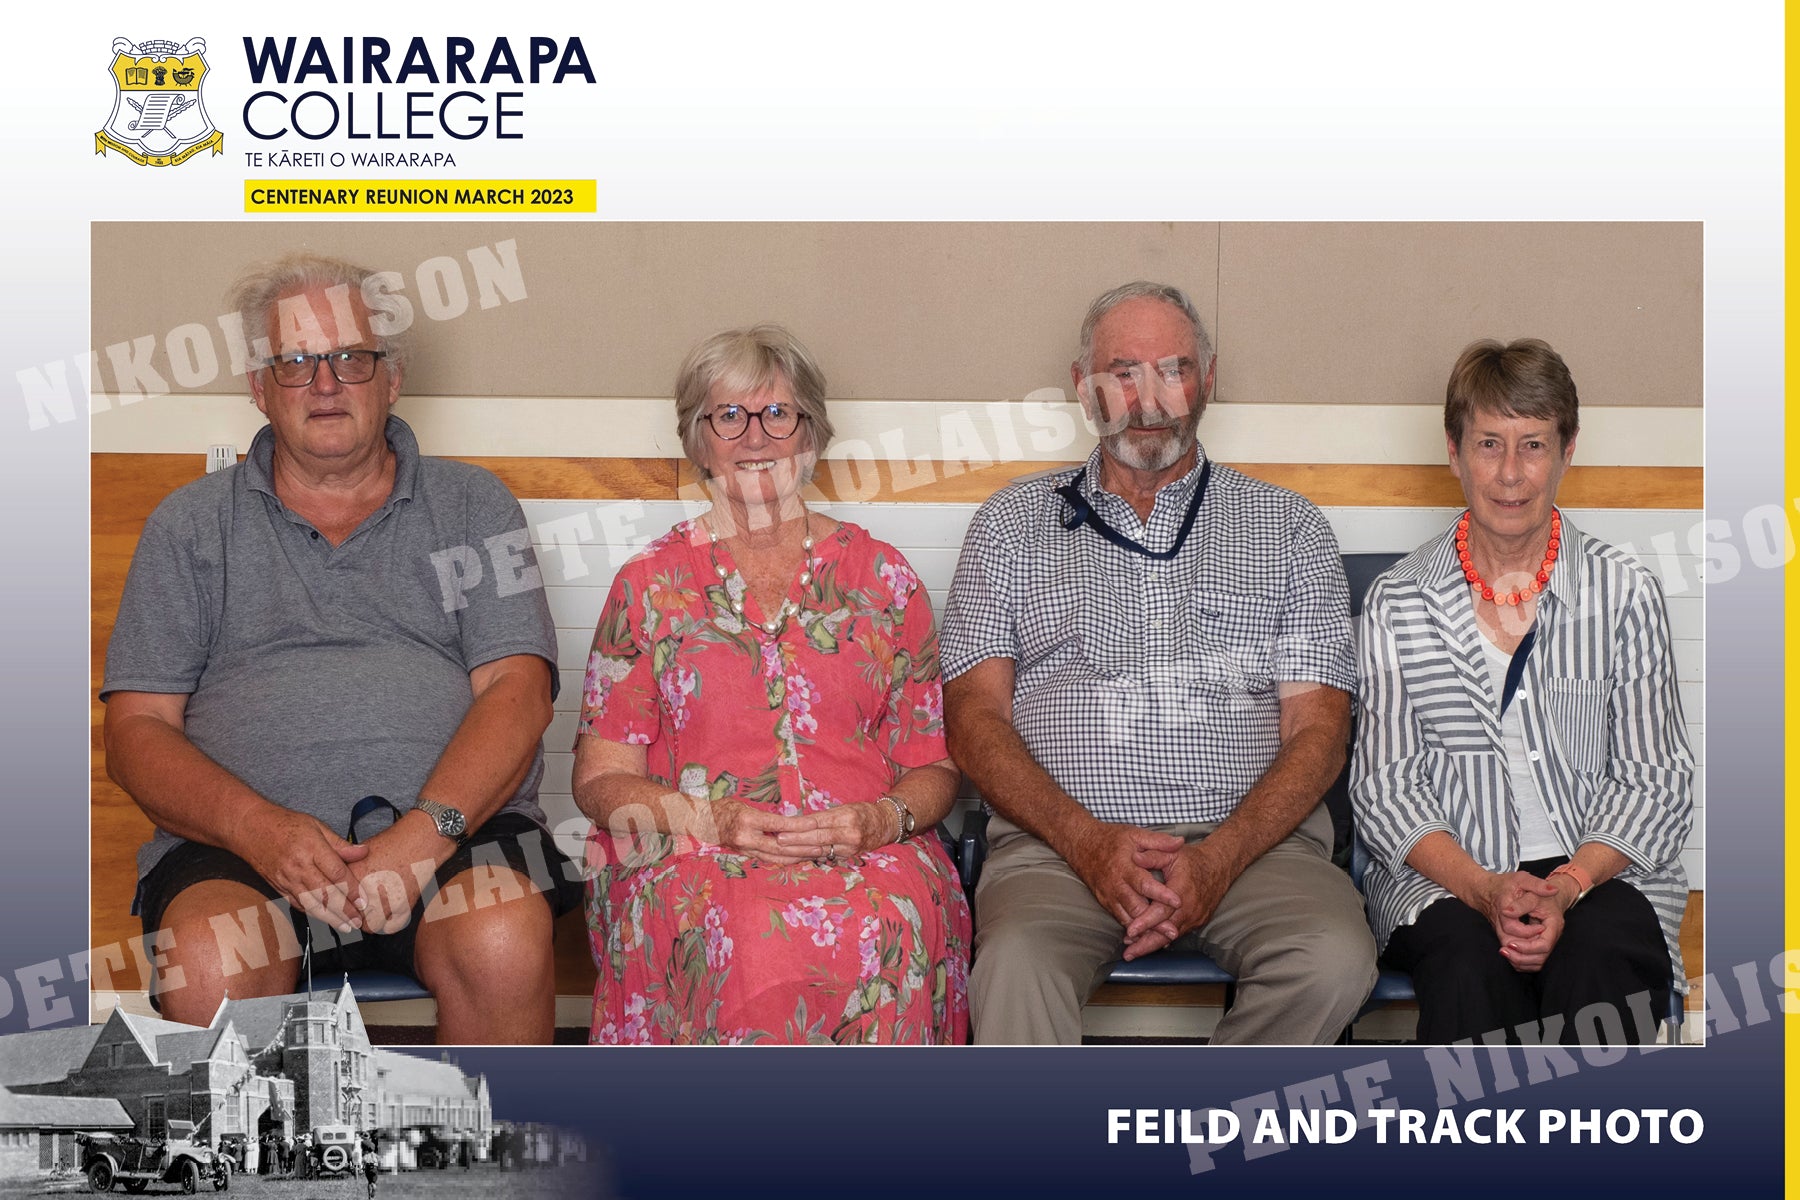 Field and Track Photo - Wairarapa College Centenary